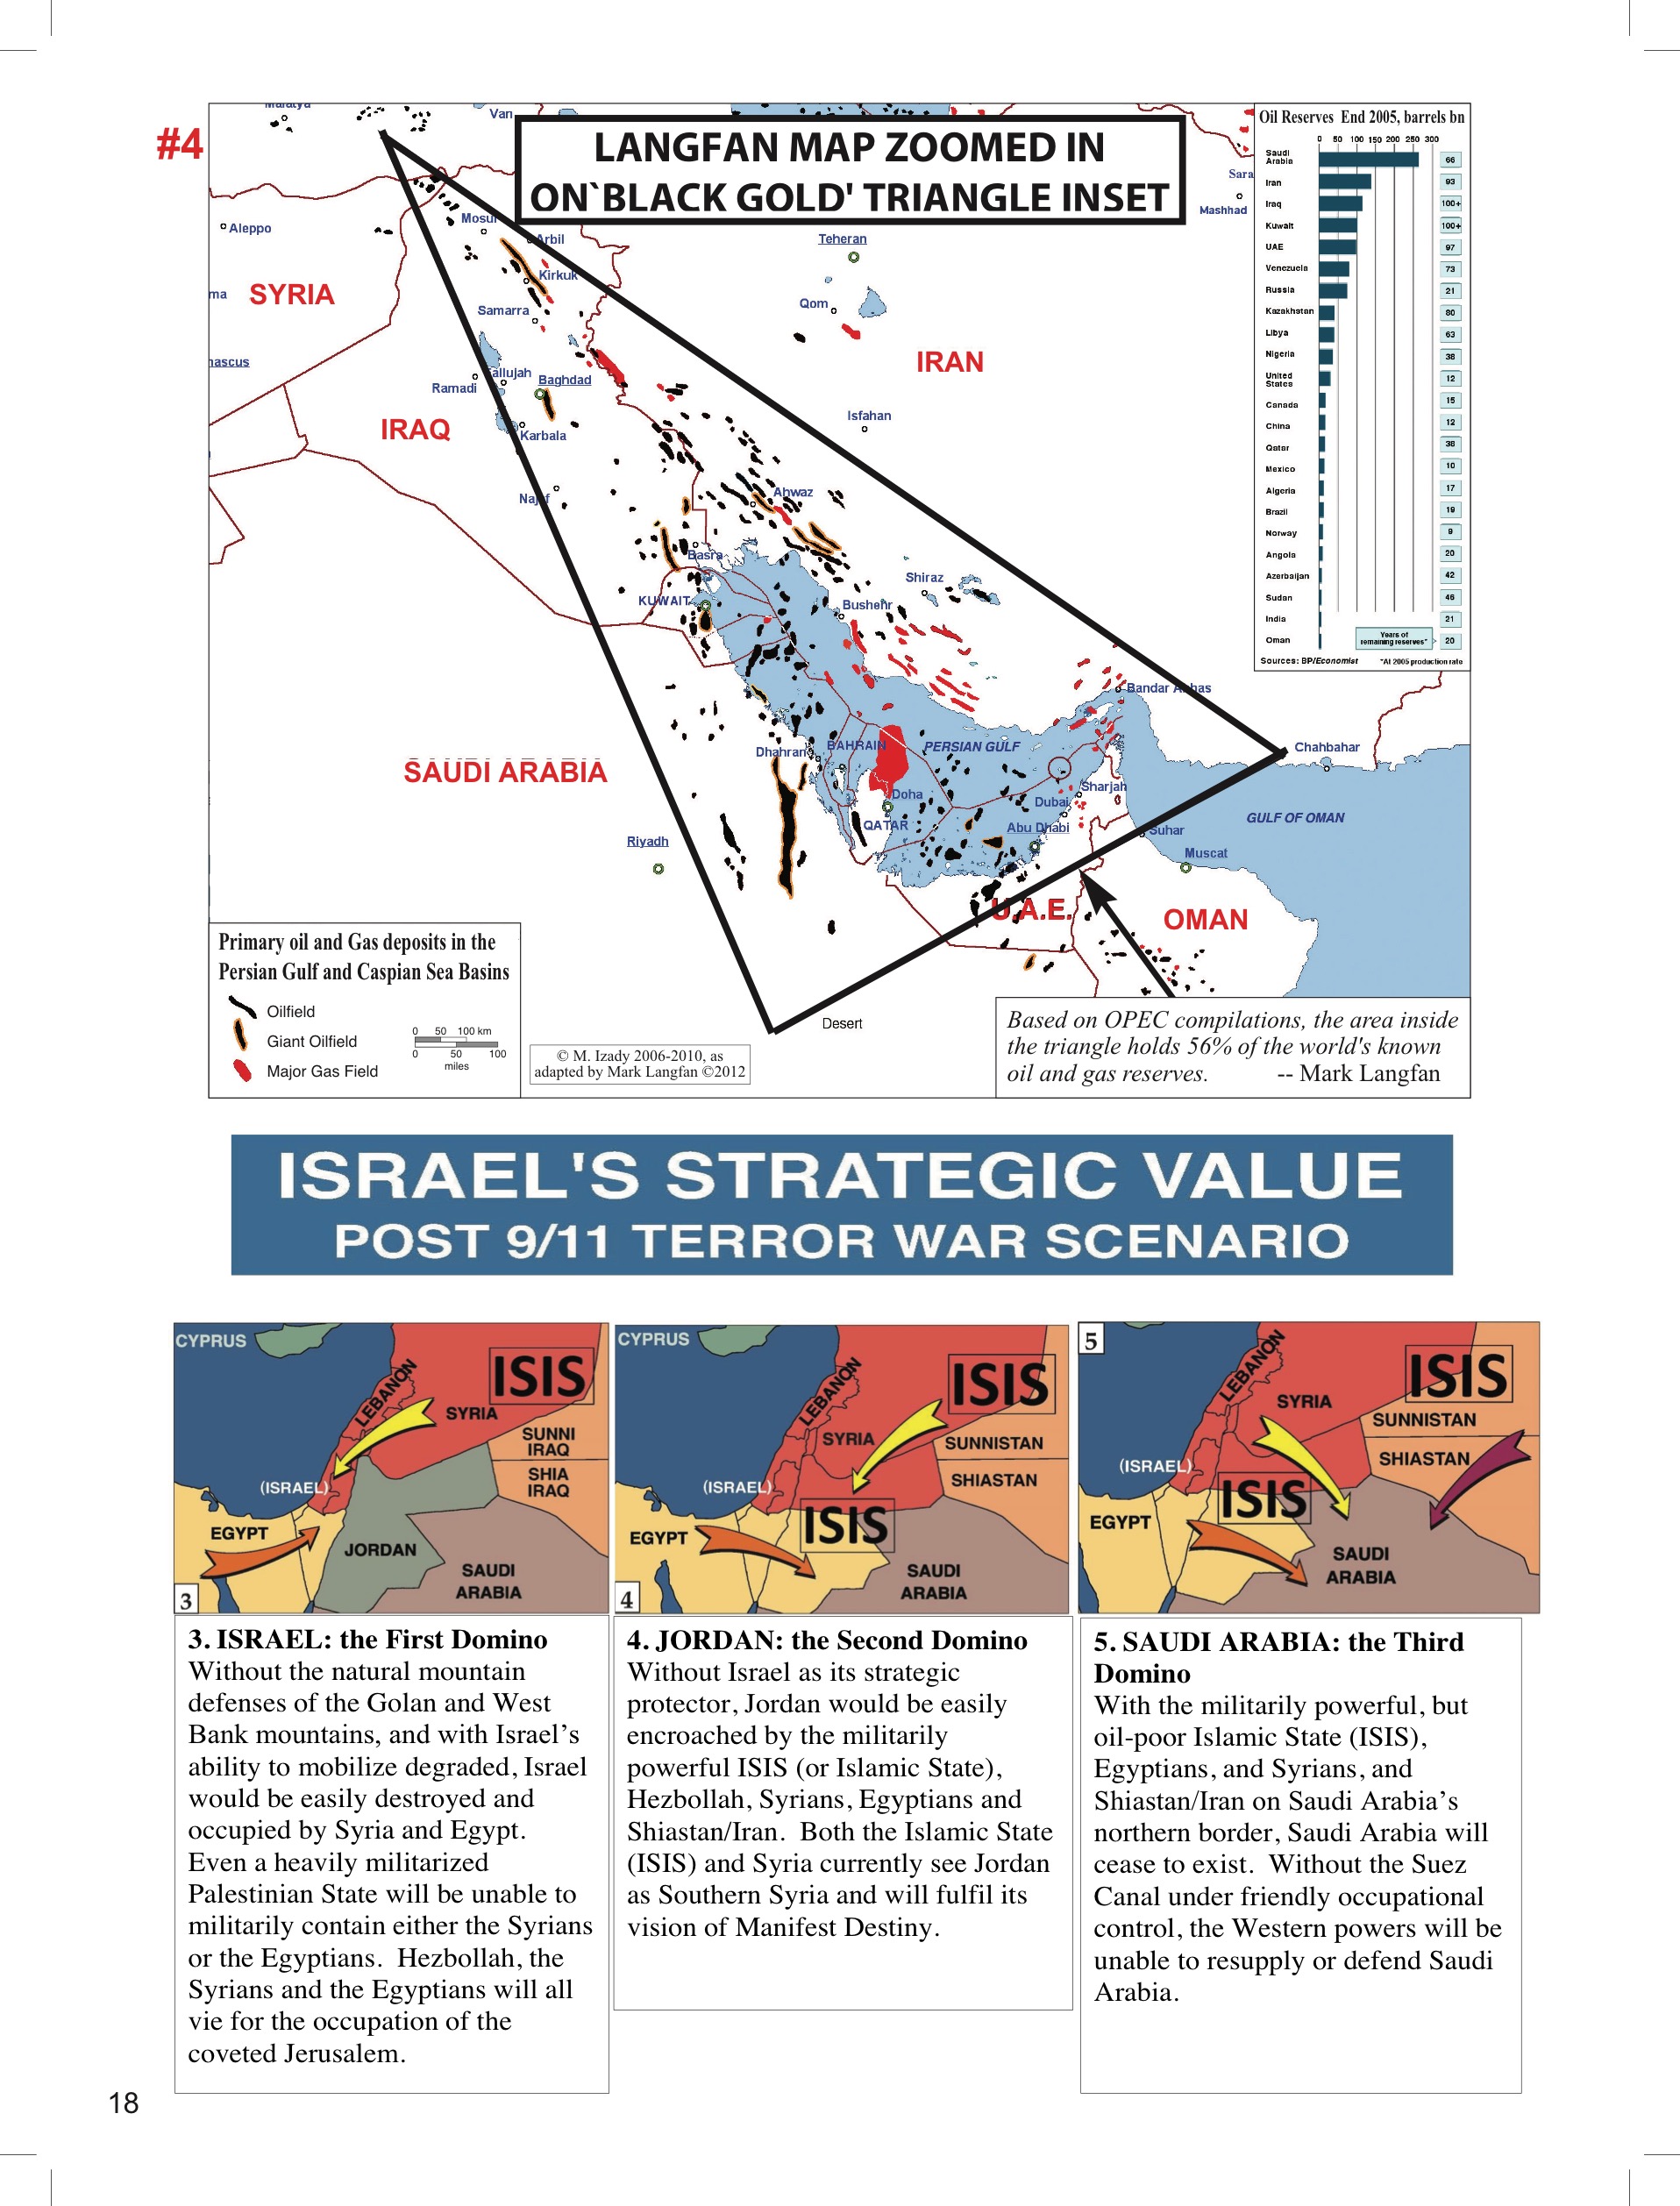 Valor Estratégico de Israel: Teatro Oriental - Mark Langfan